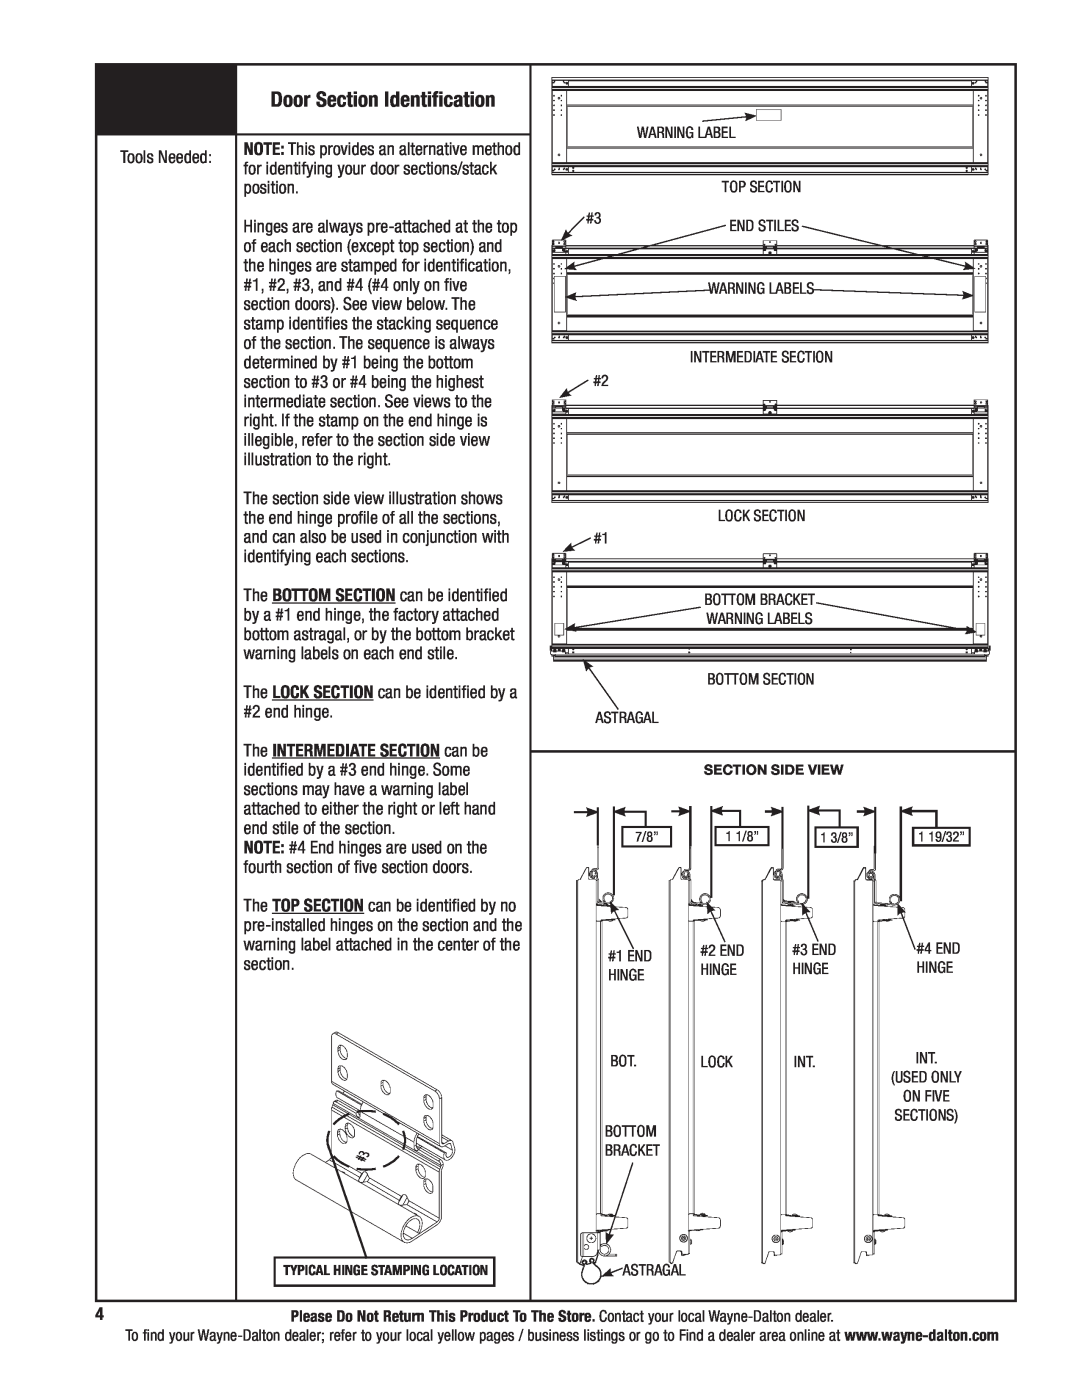 Wayne-Dalton 5140, 5120 installation instructions Door Section Identification 